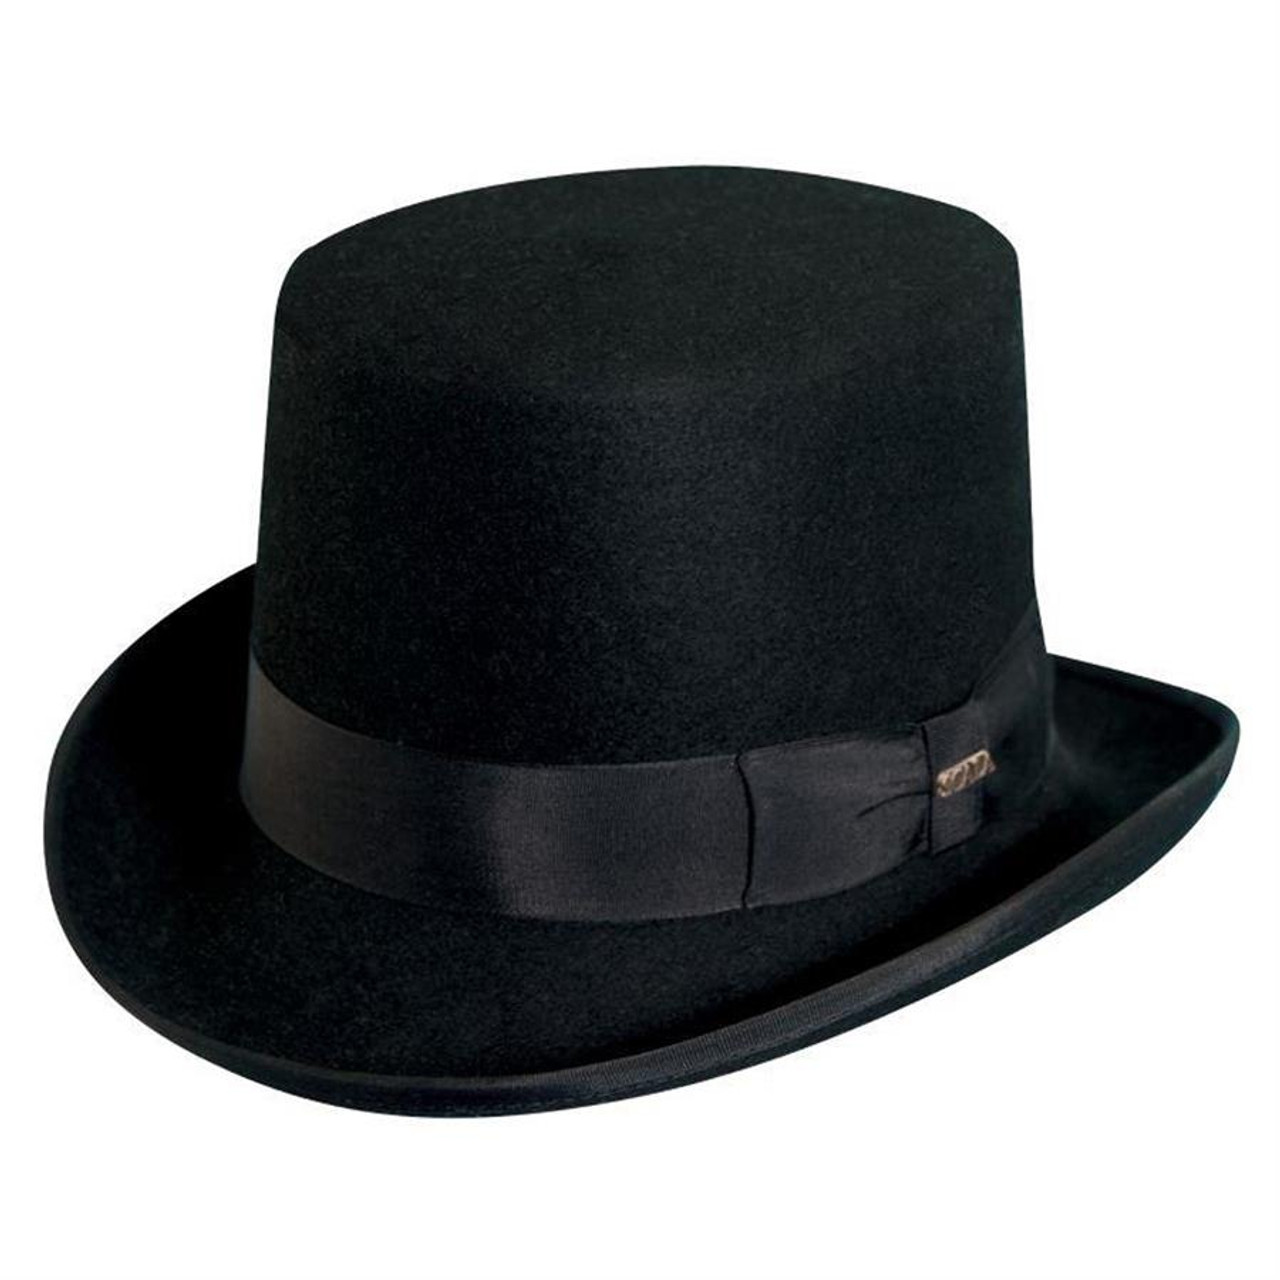 Wool Felt Black Top Hat - 5